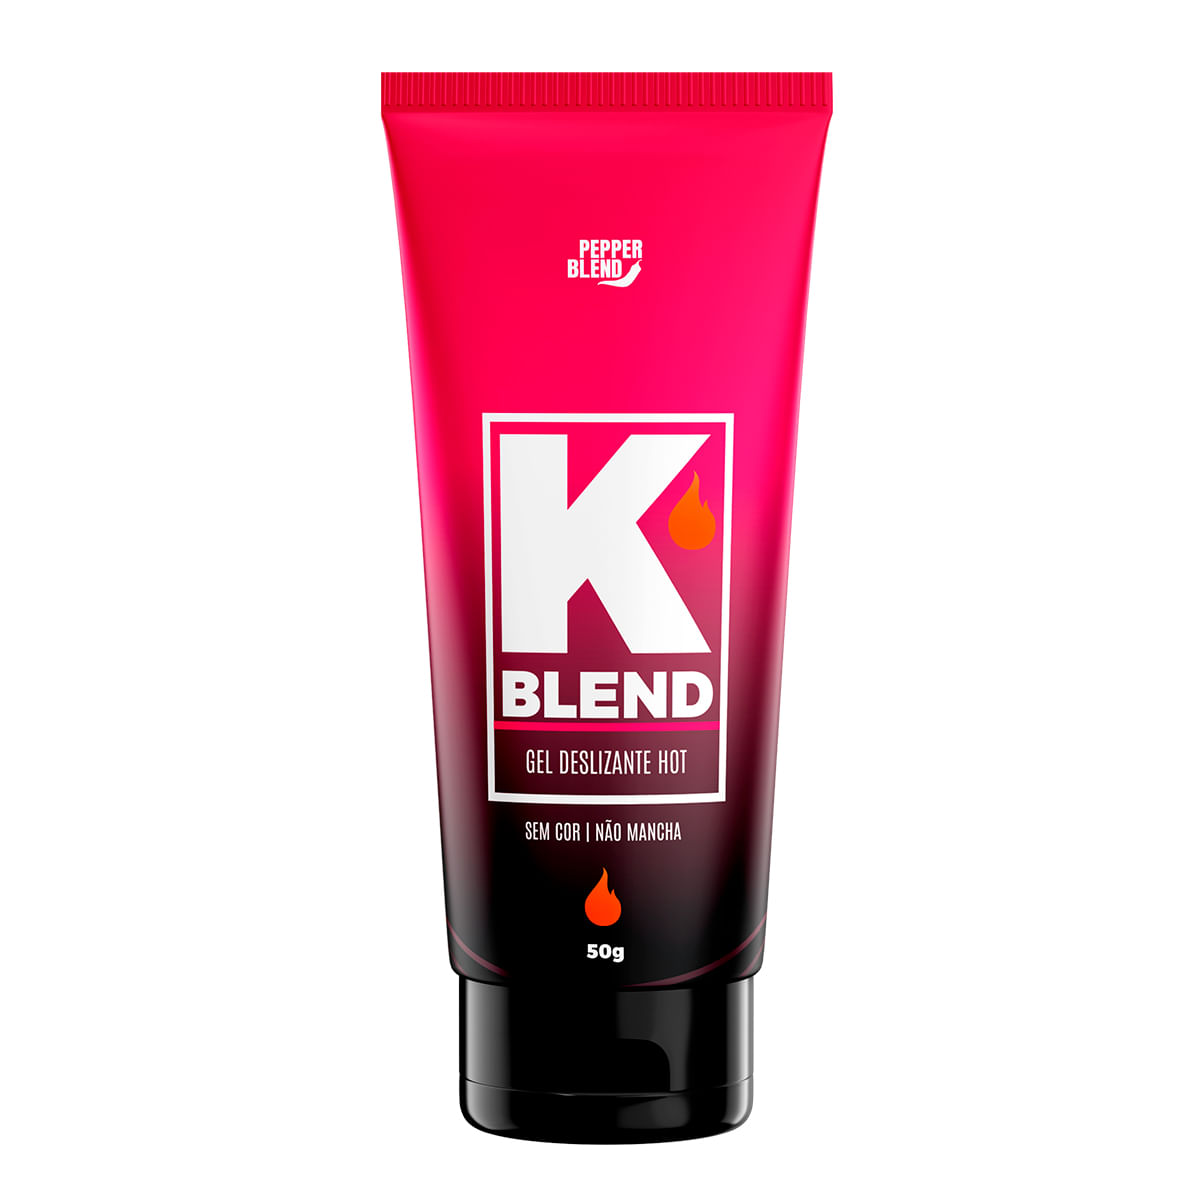 K Blend Hot Gel Deslizante 50g Pepper Blend